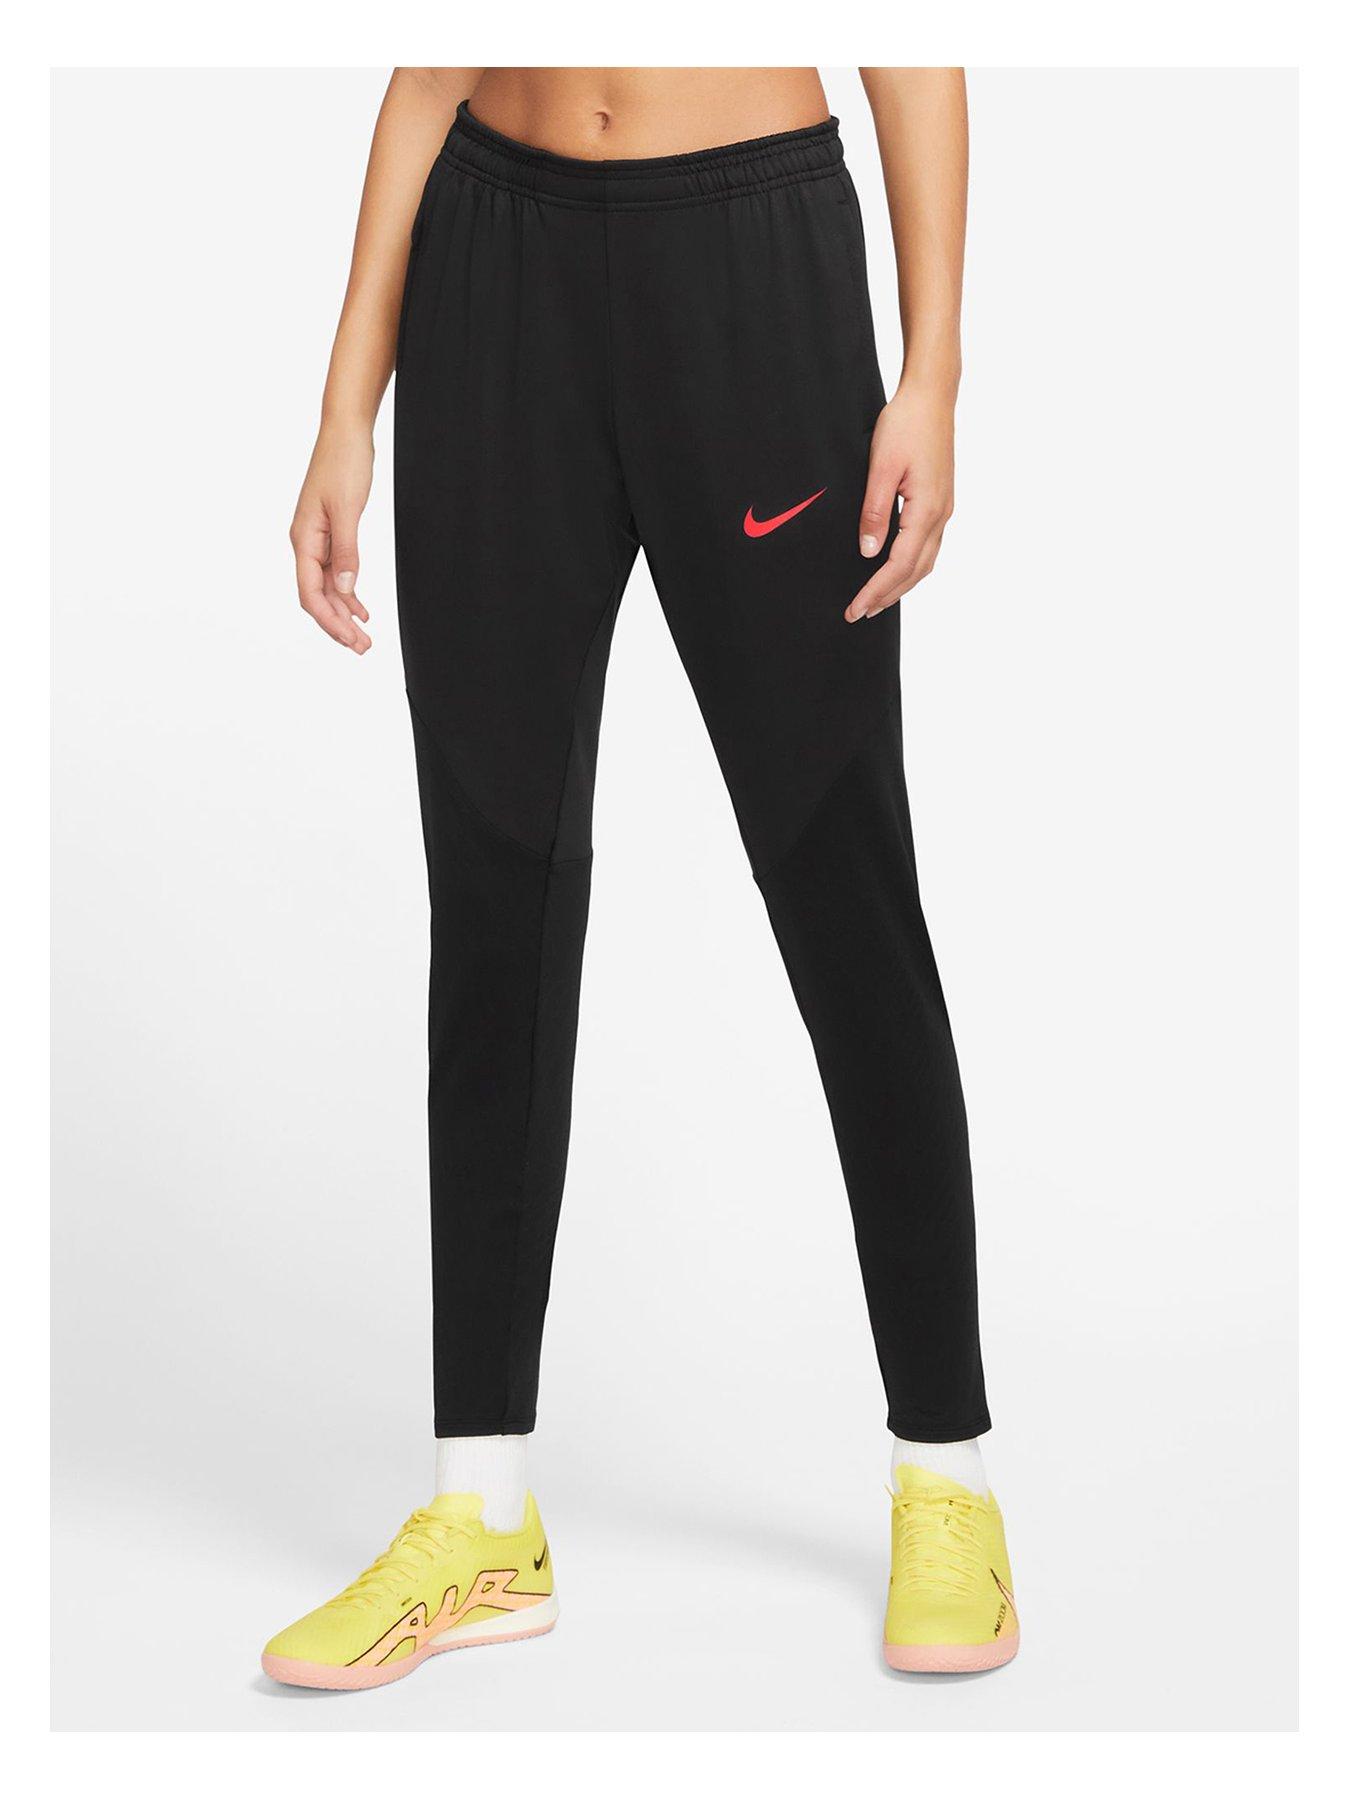 Women's Black Trousers & Tights. Nike UK